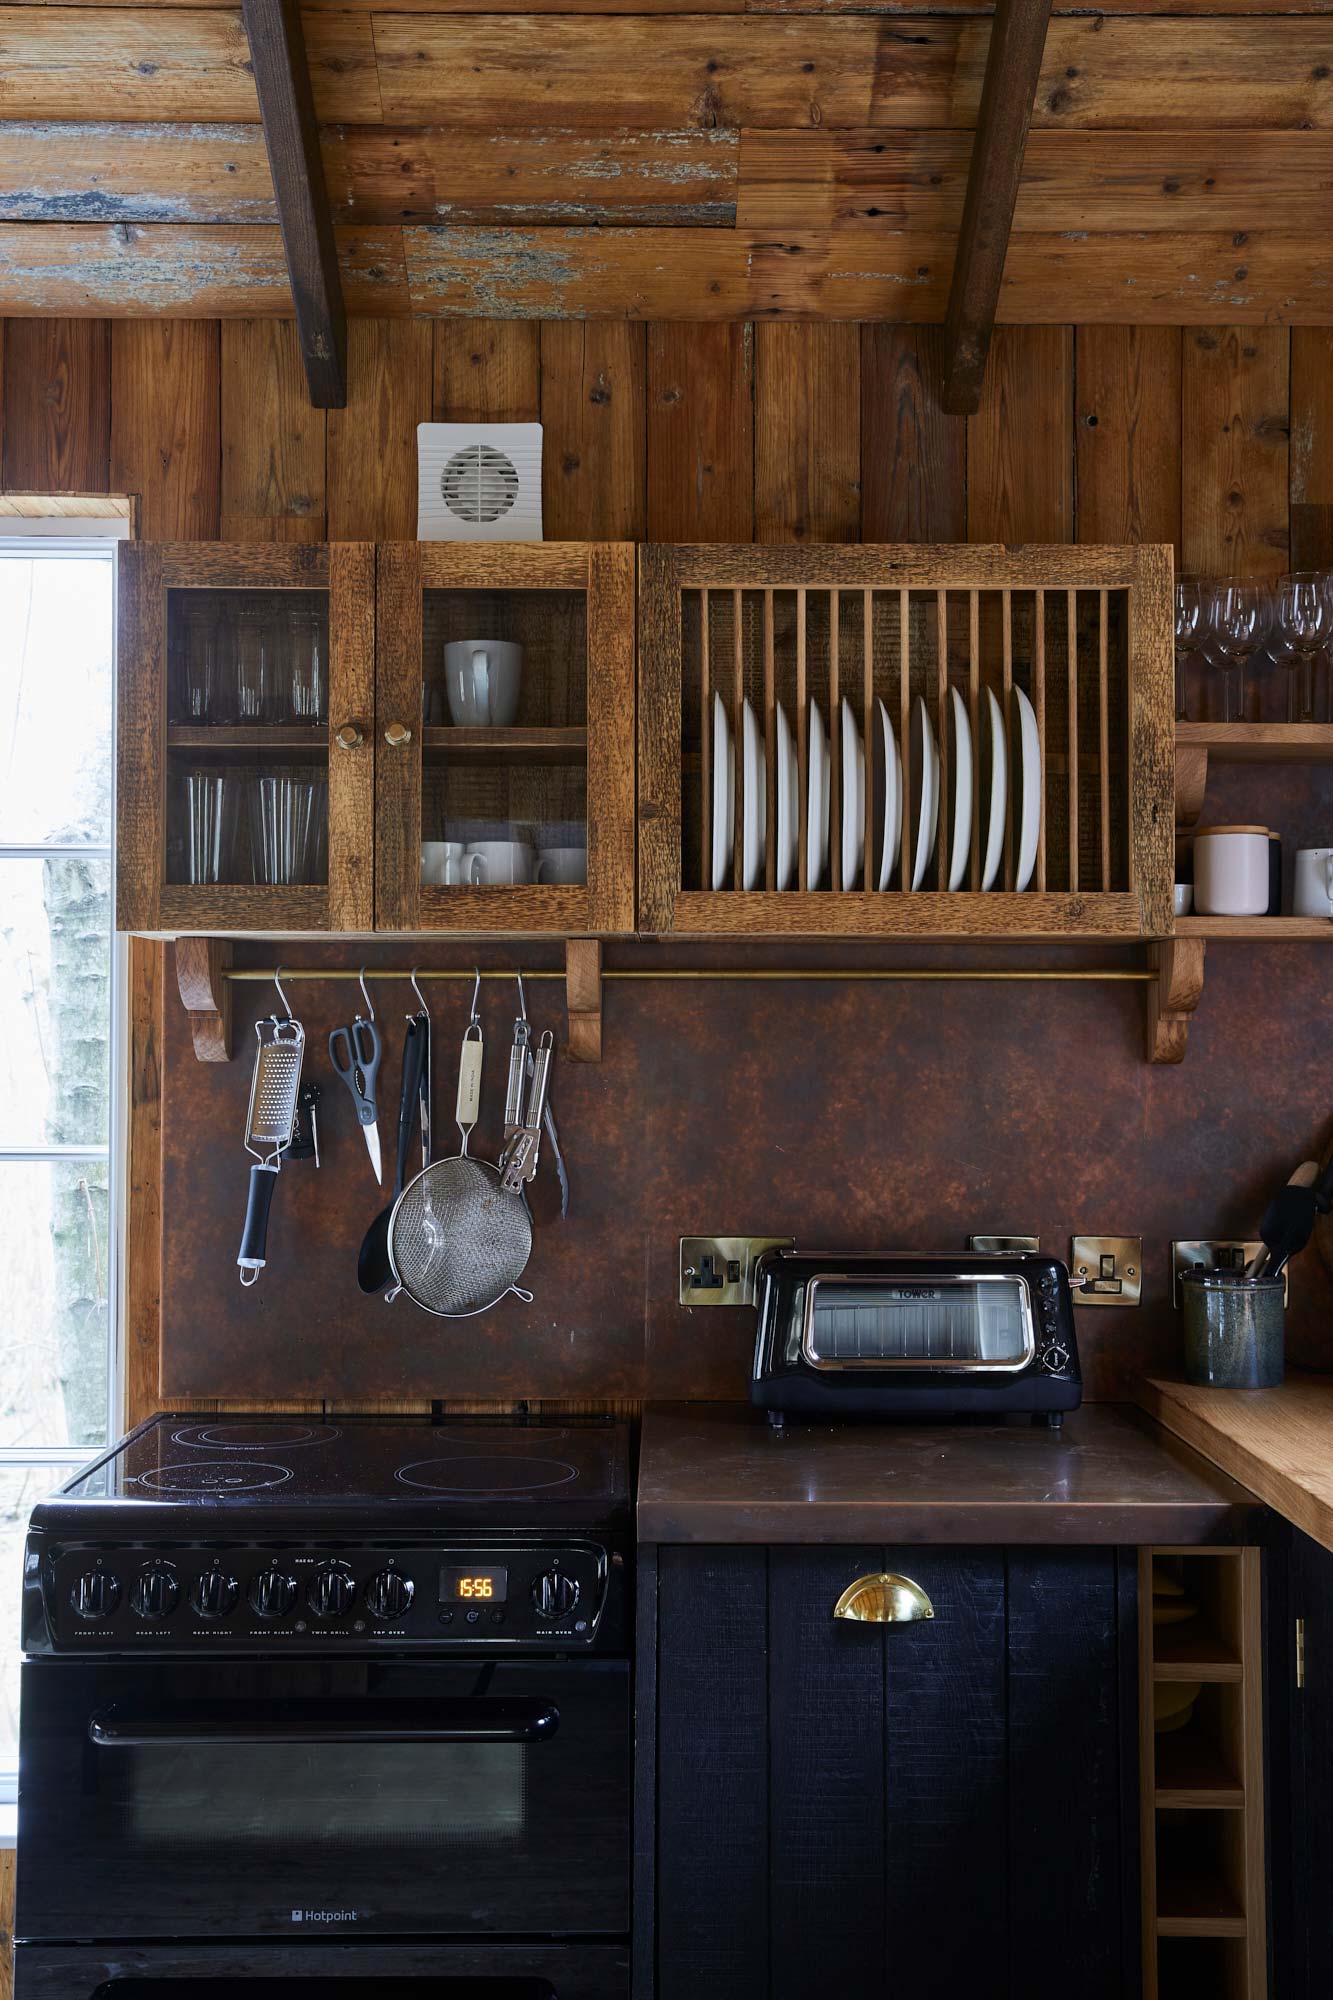 Rustic kitchen plate rack